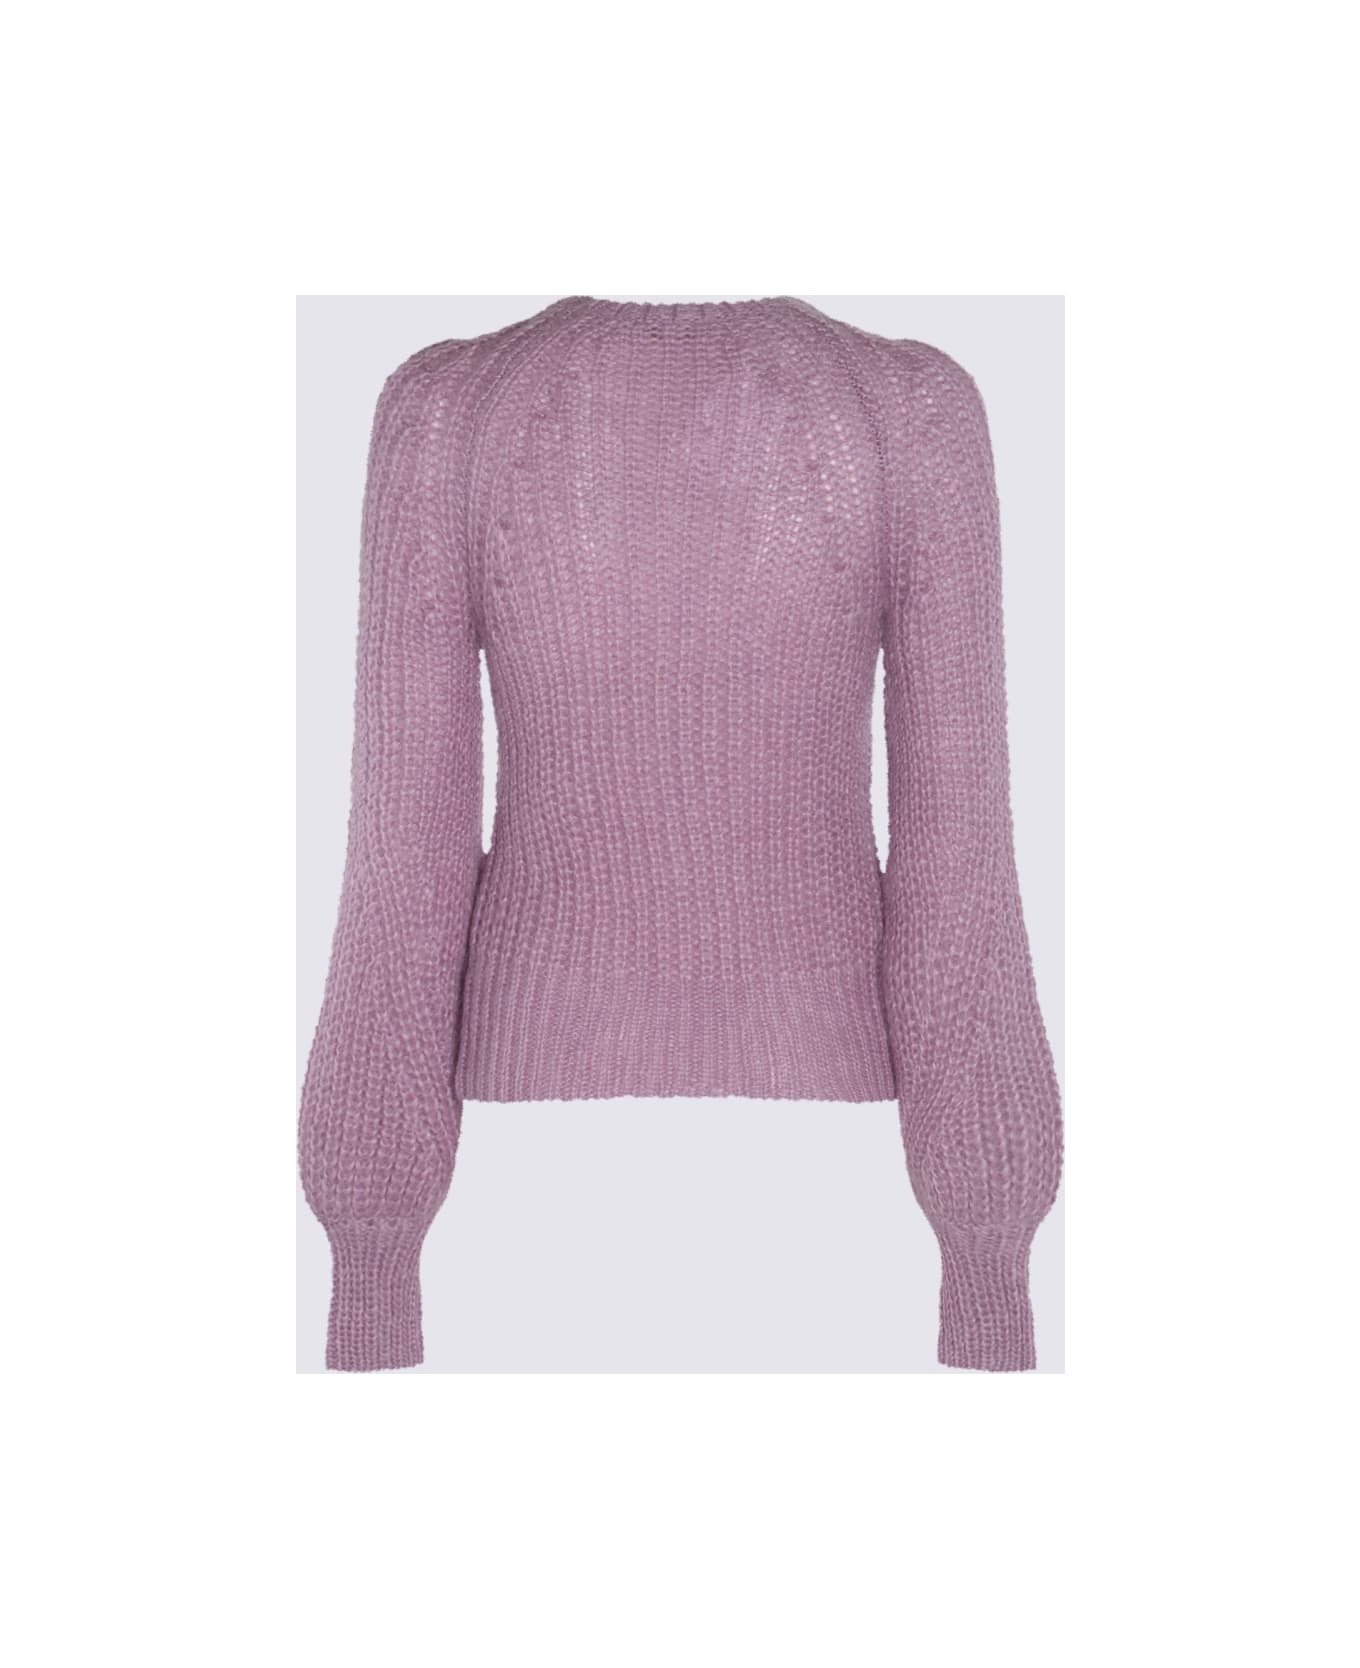 Zimmermann Dusty Lilac Mohair Blend Sweater - DUSTY LILAC